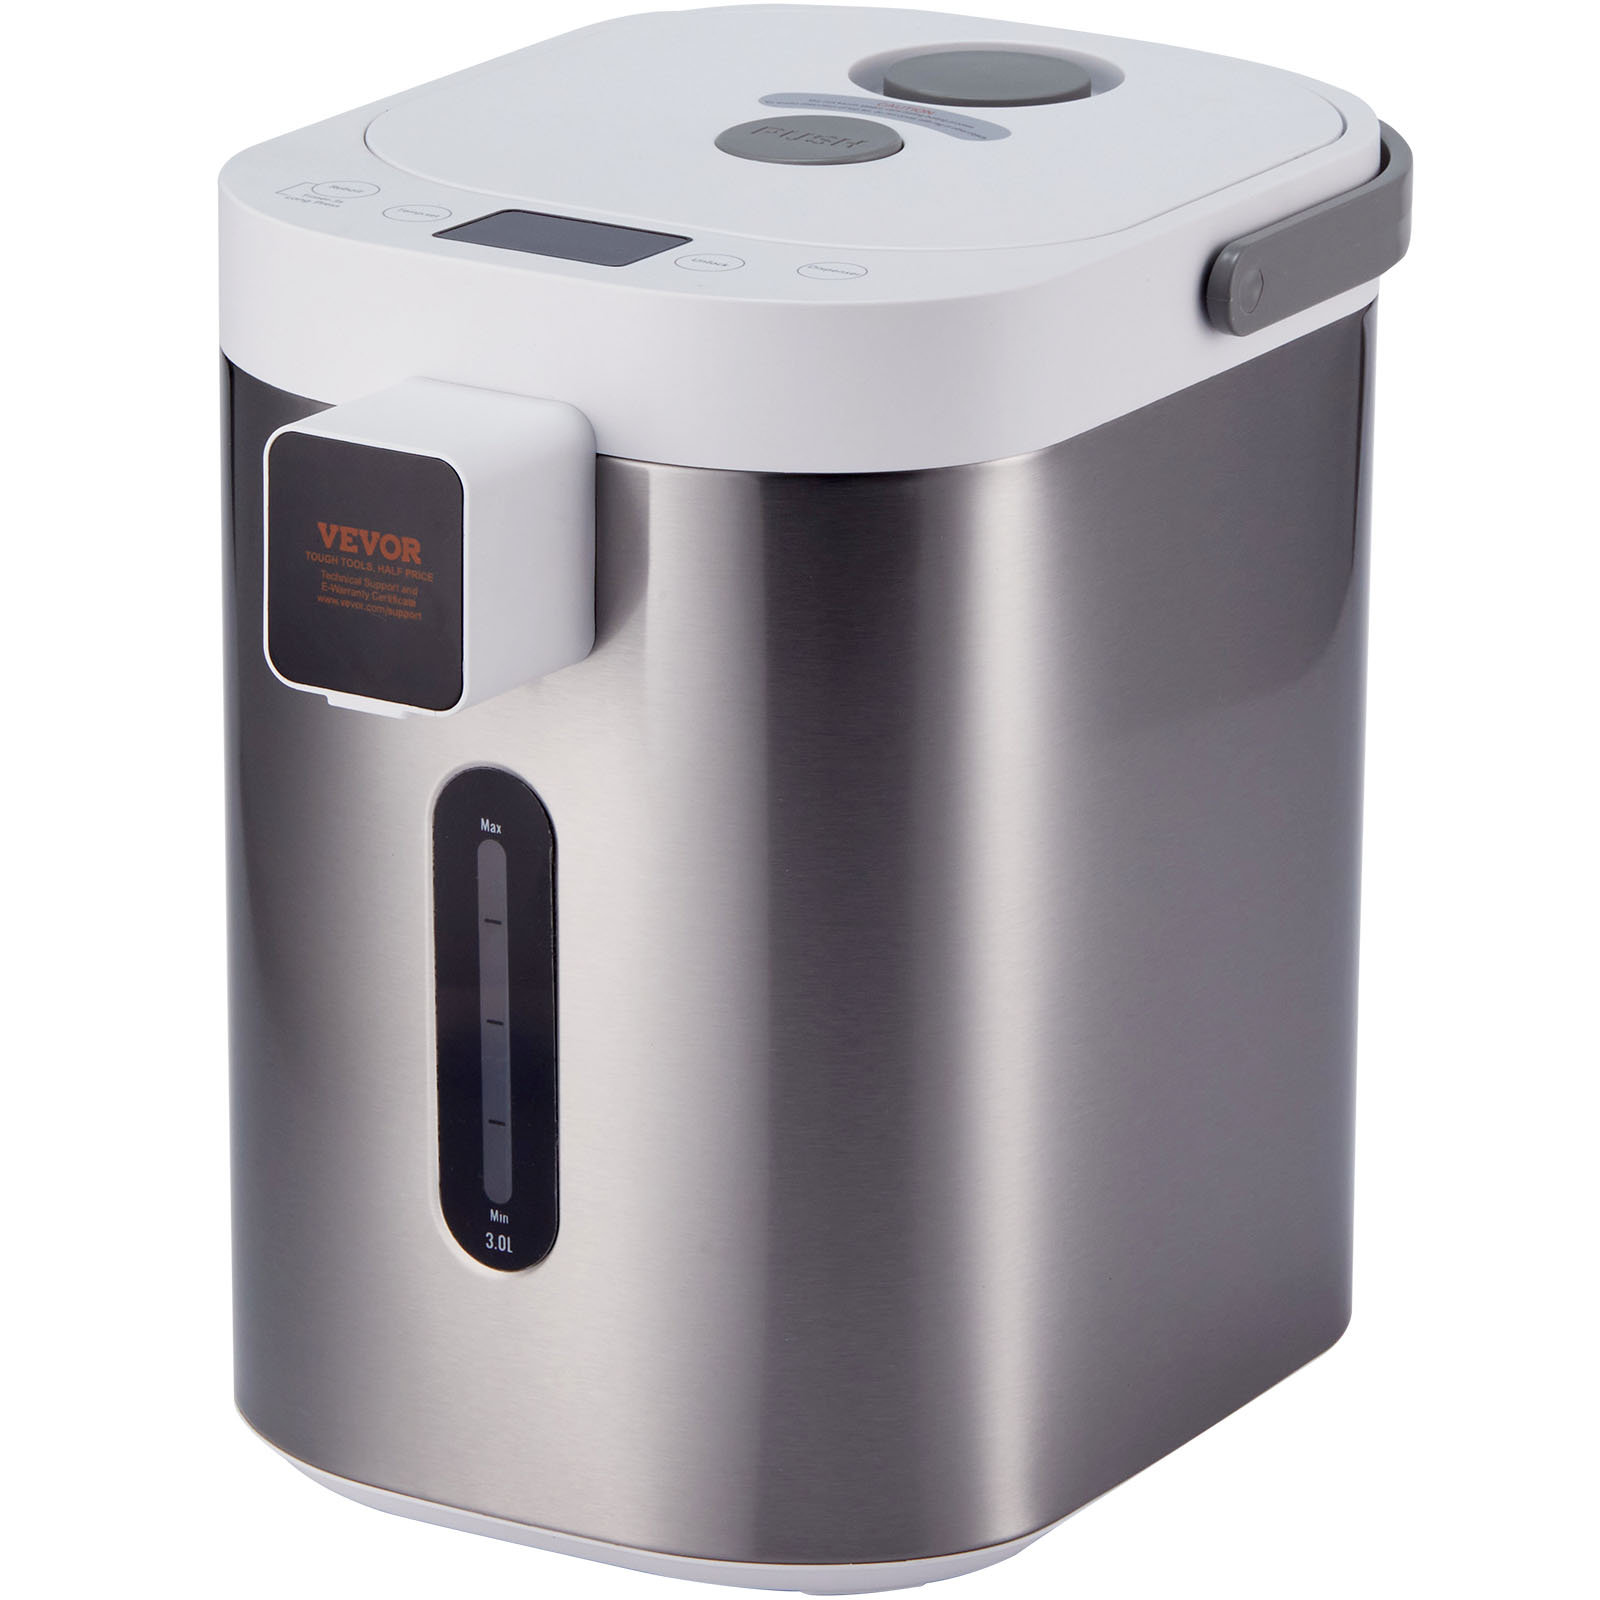 Stainless Steel Whistling Tea Kettle Water Boiler Jug 3L for